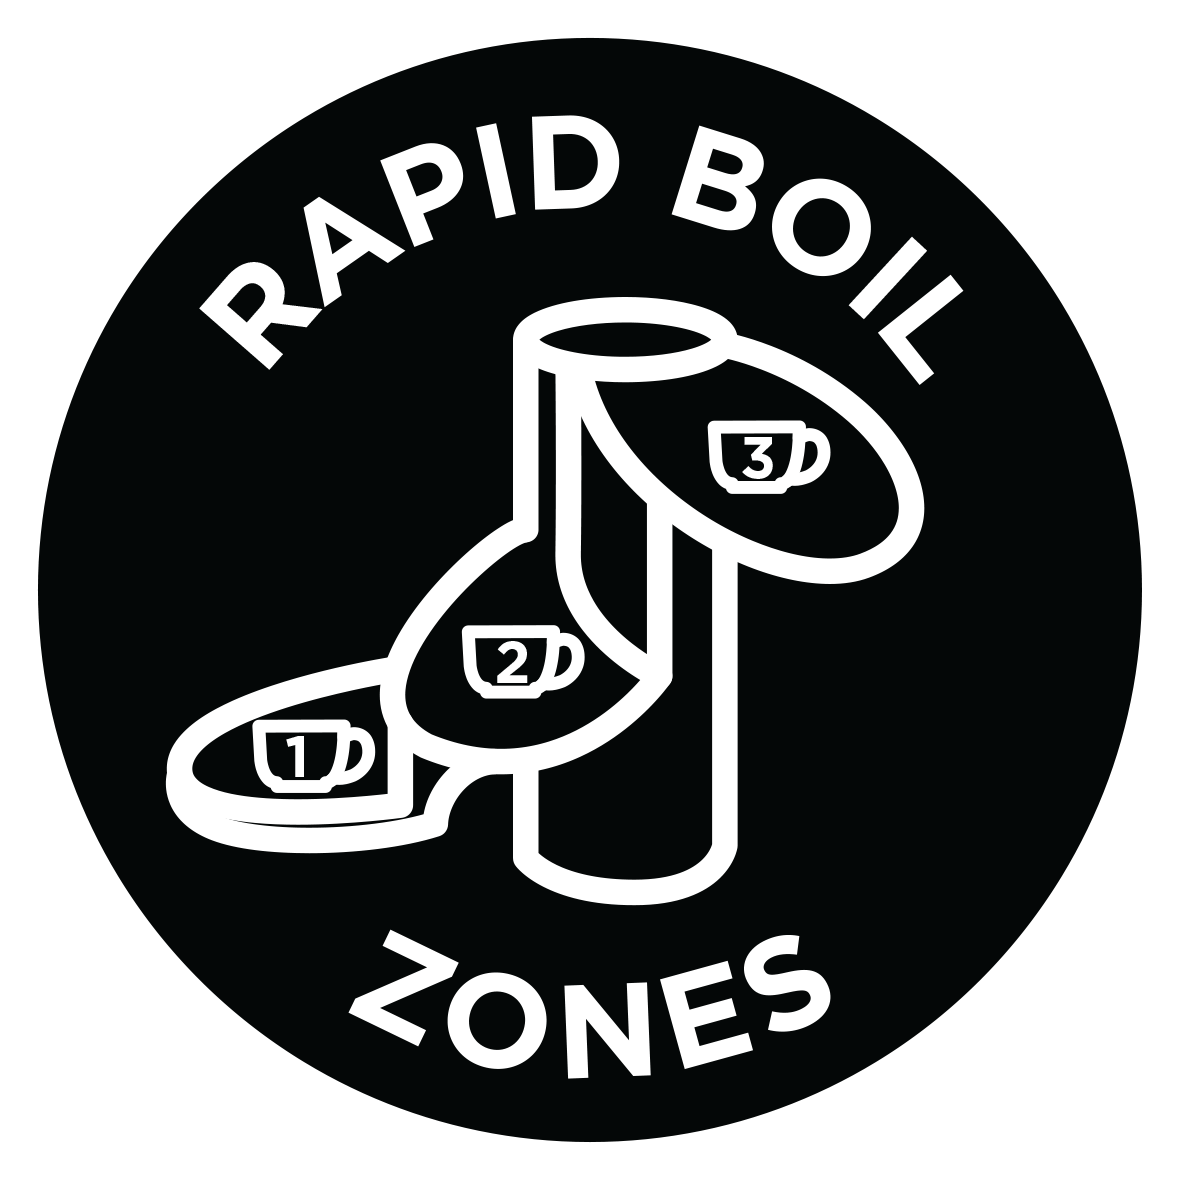 Rapid boil zones 